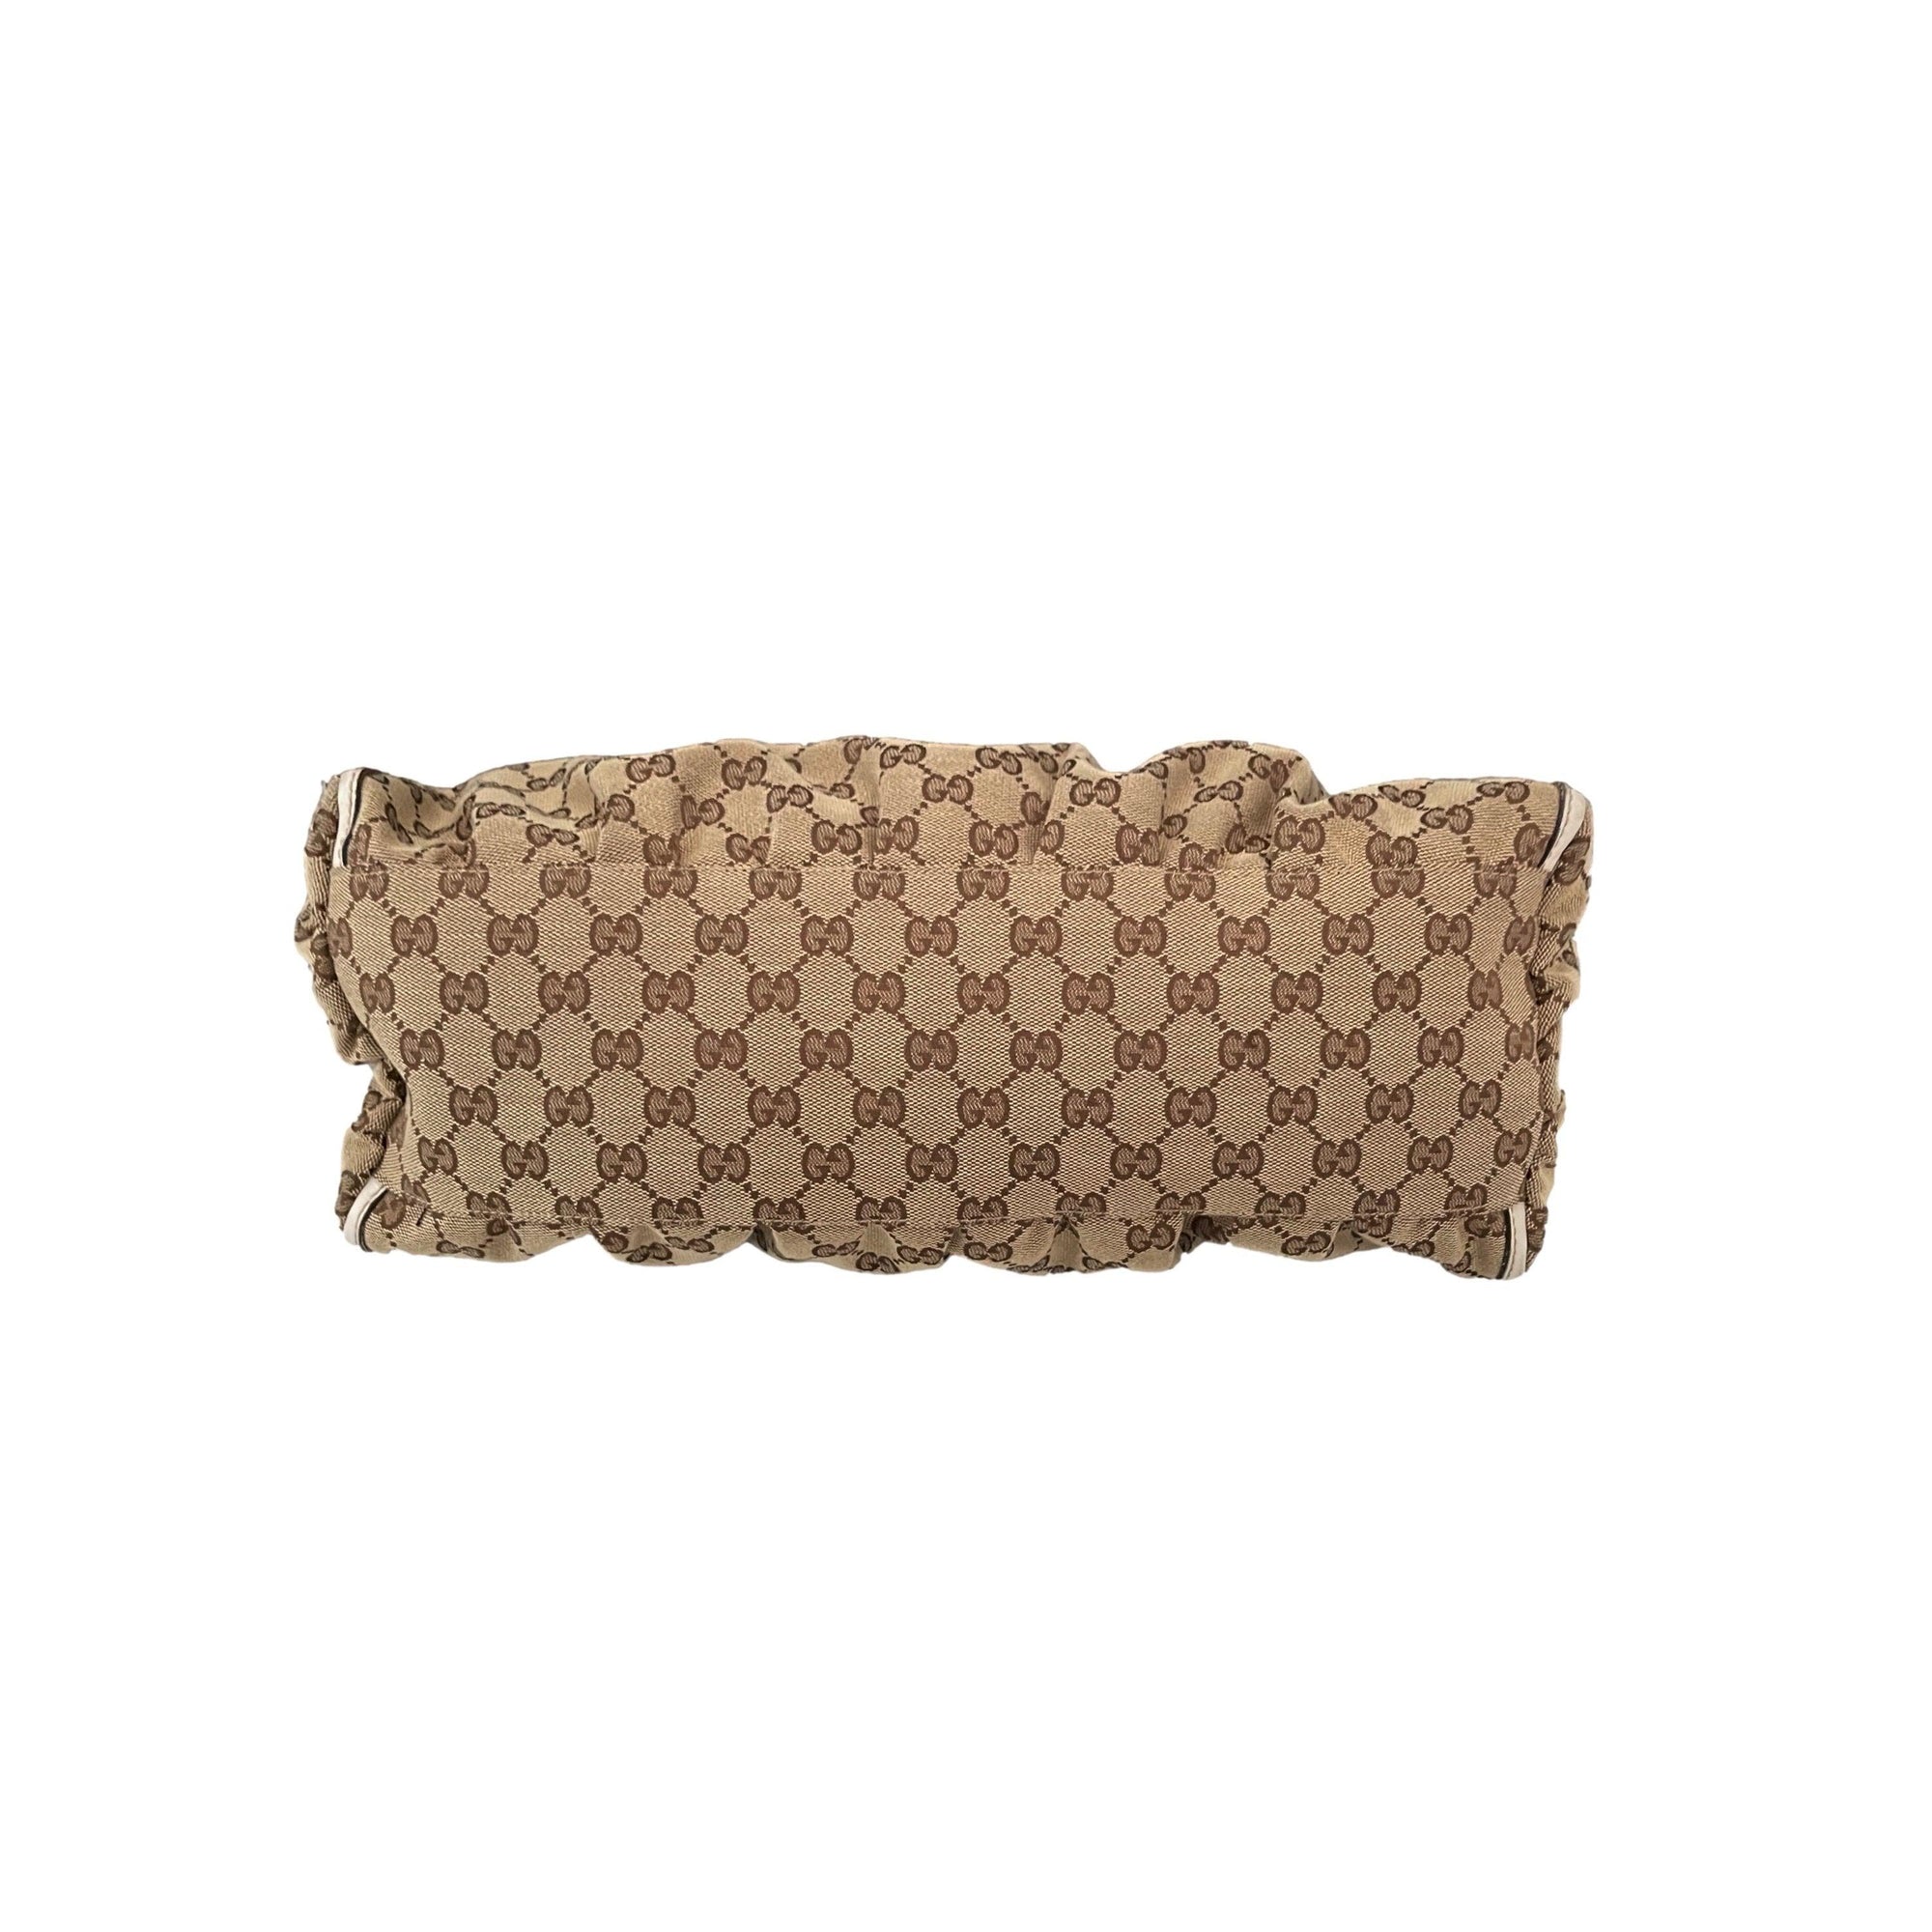 Gucci Beige Monogram Hobo Bag - Handbags